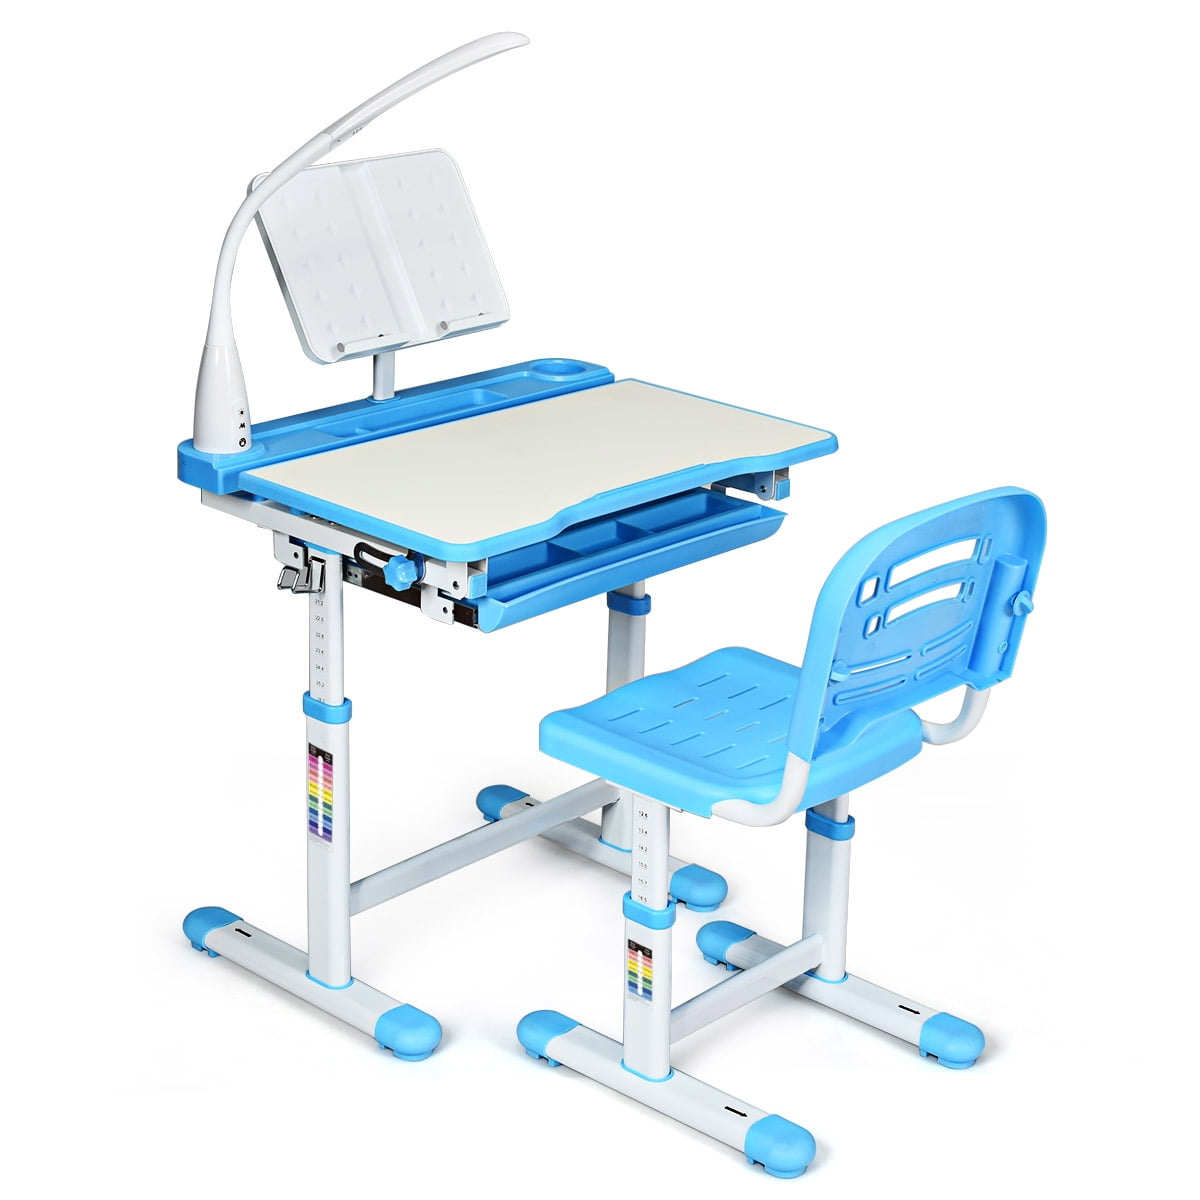 Multi-Function Kids Desk & Chair Set Height Adjustable School Study Table,  Blue, 1 Unit - Kroger